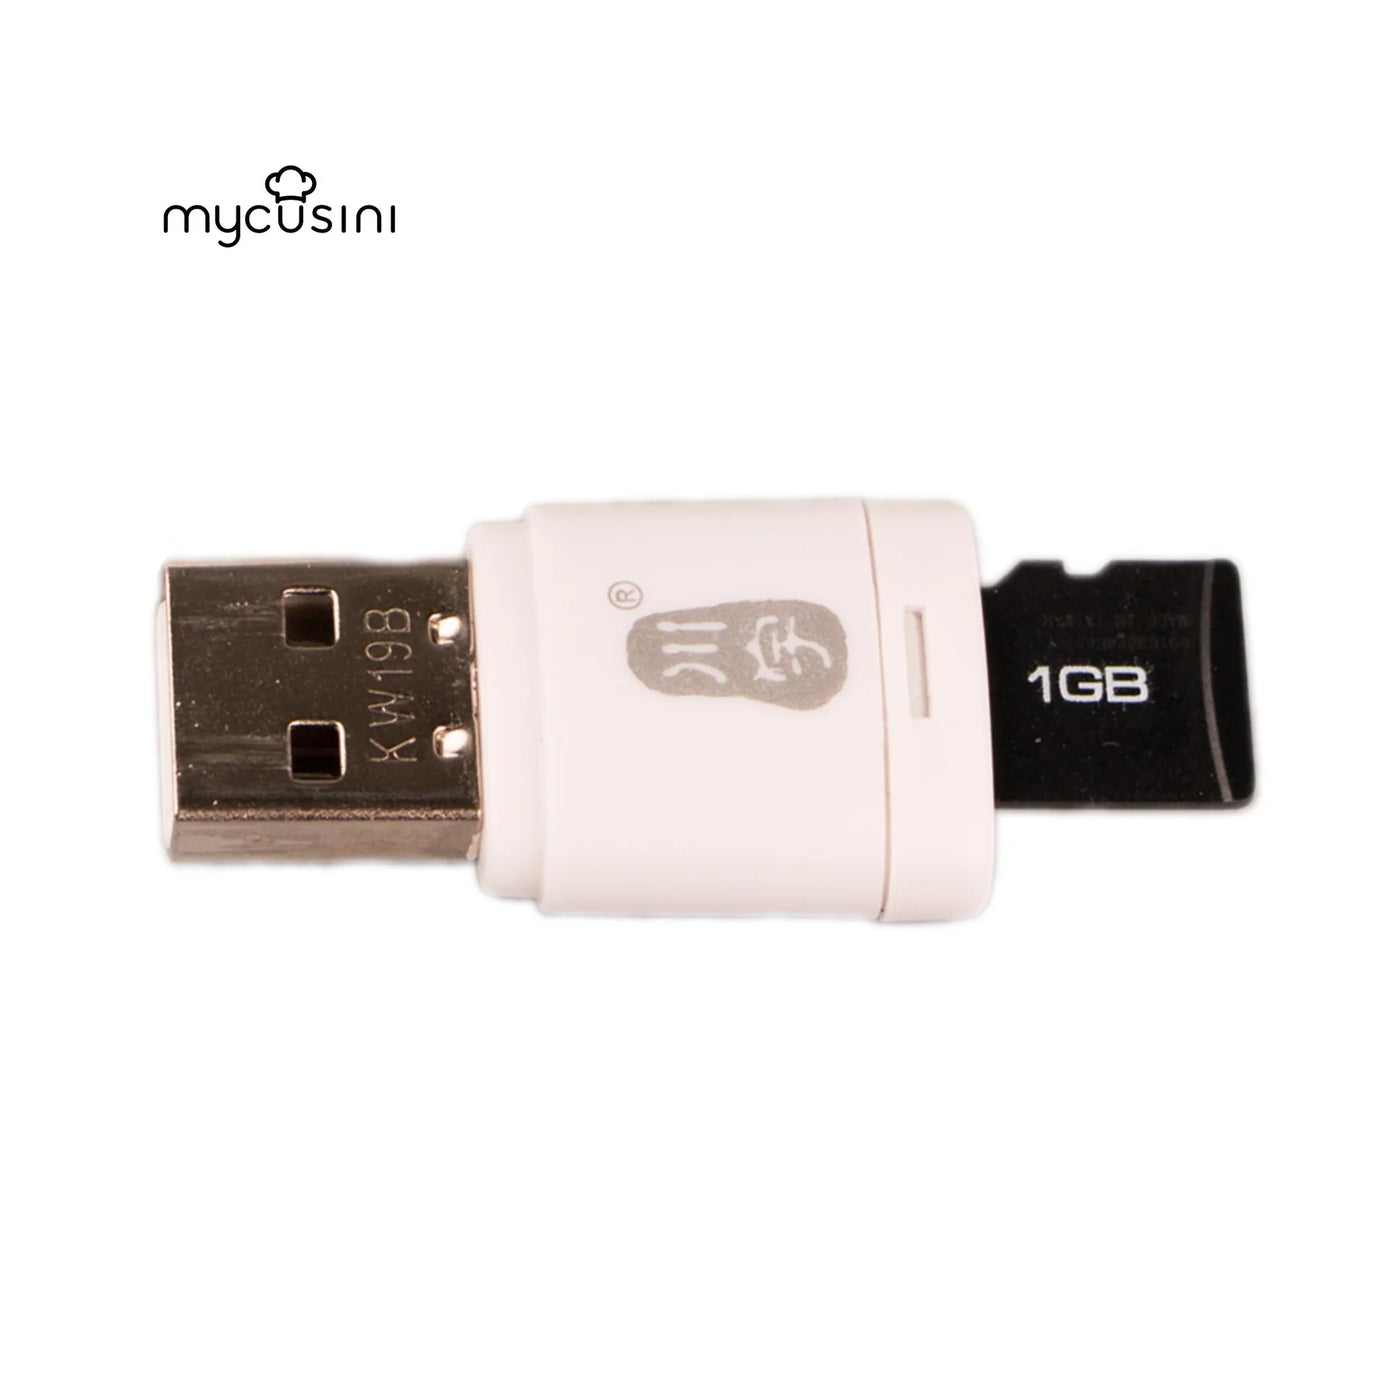 mycusini® SD-Kartenleser USB mit SD-Karte - 3D Material-Shop 